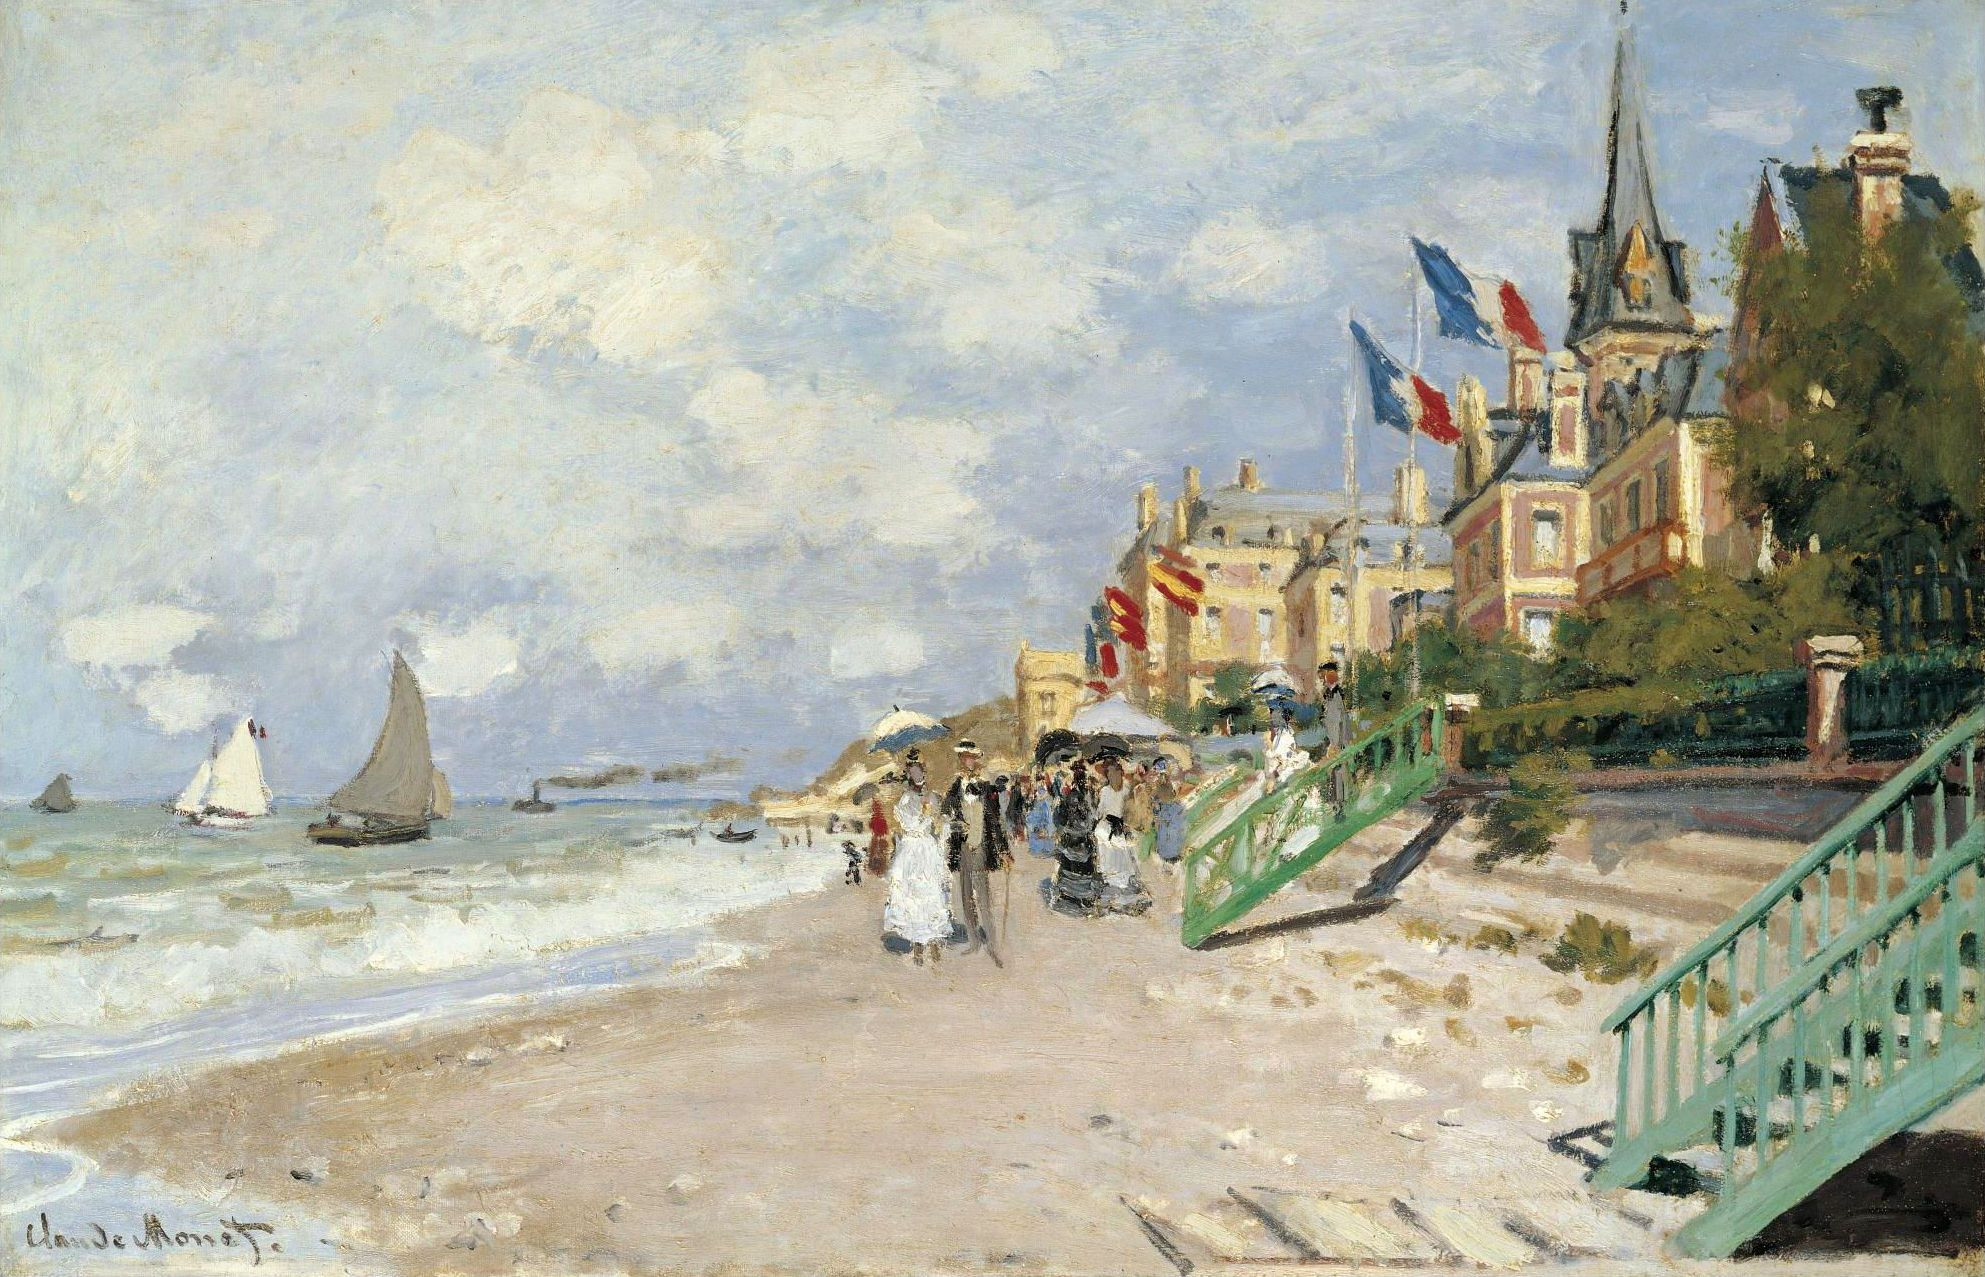 Клод Моне, «Пляж в&nbsp;Трувиле», 1870